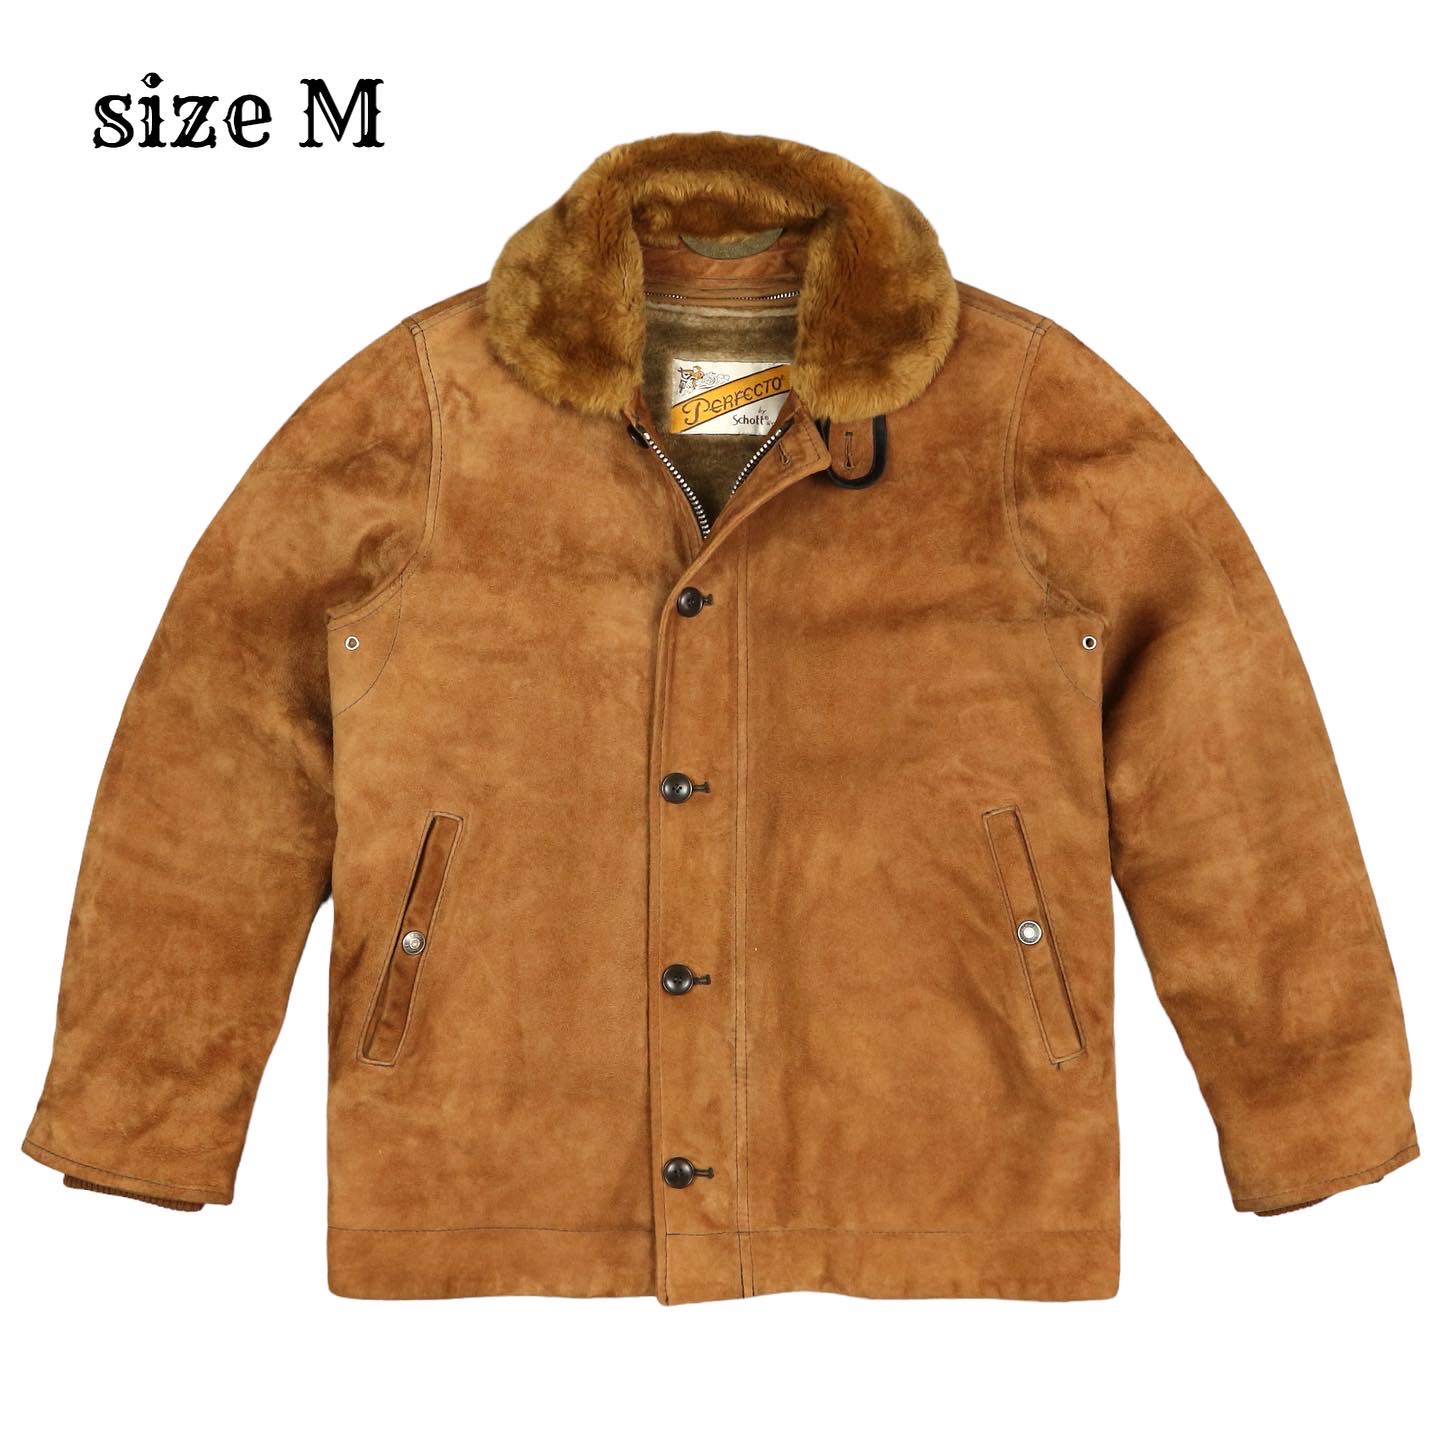 Schott Perfecto N-1 Jacket Size M